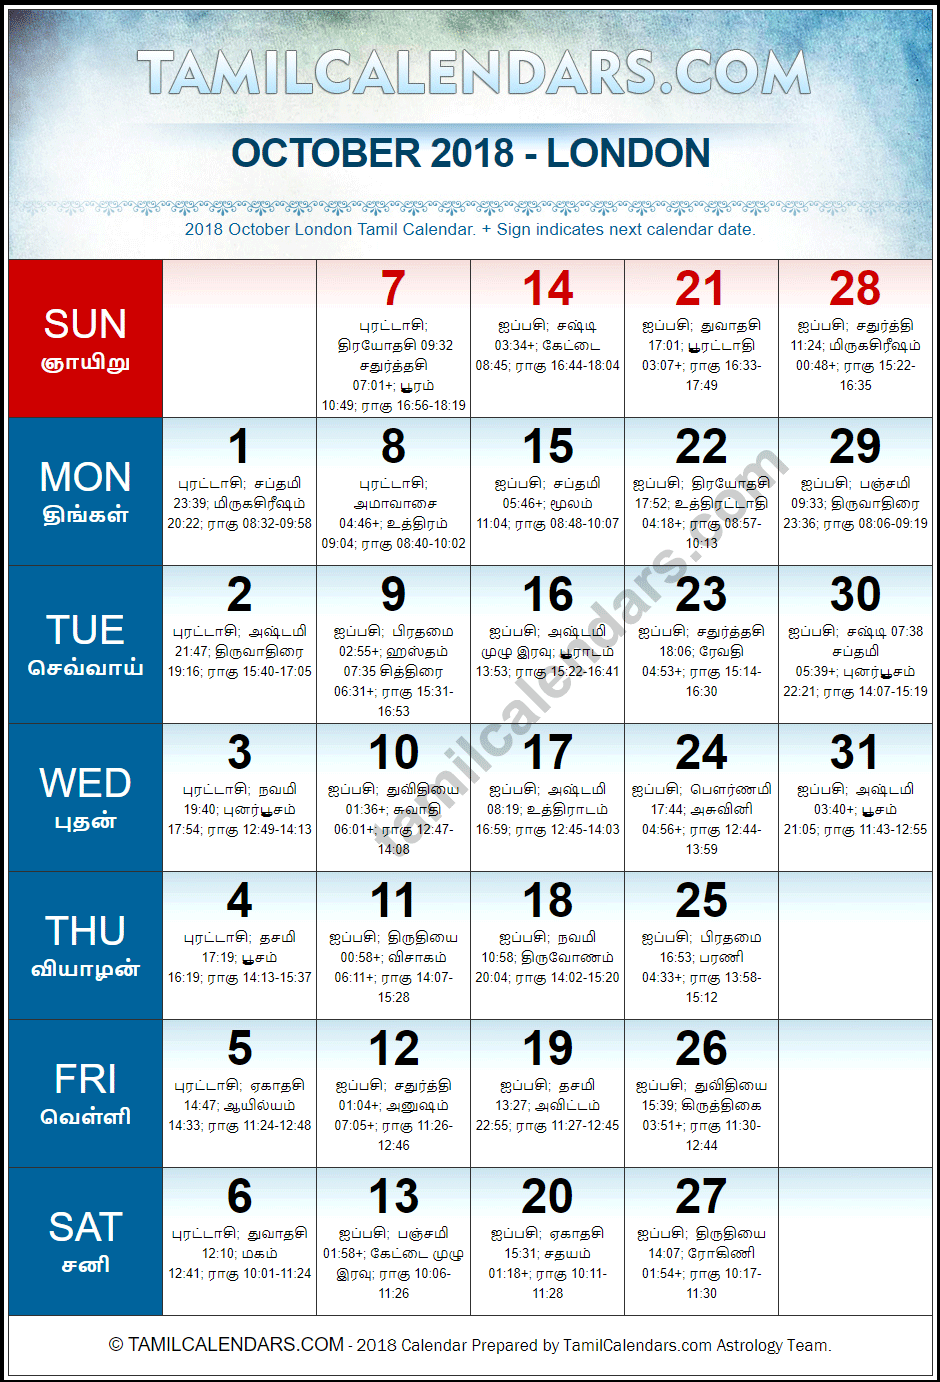 October 2018 Tamil Calendar for London, UK